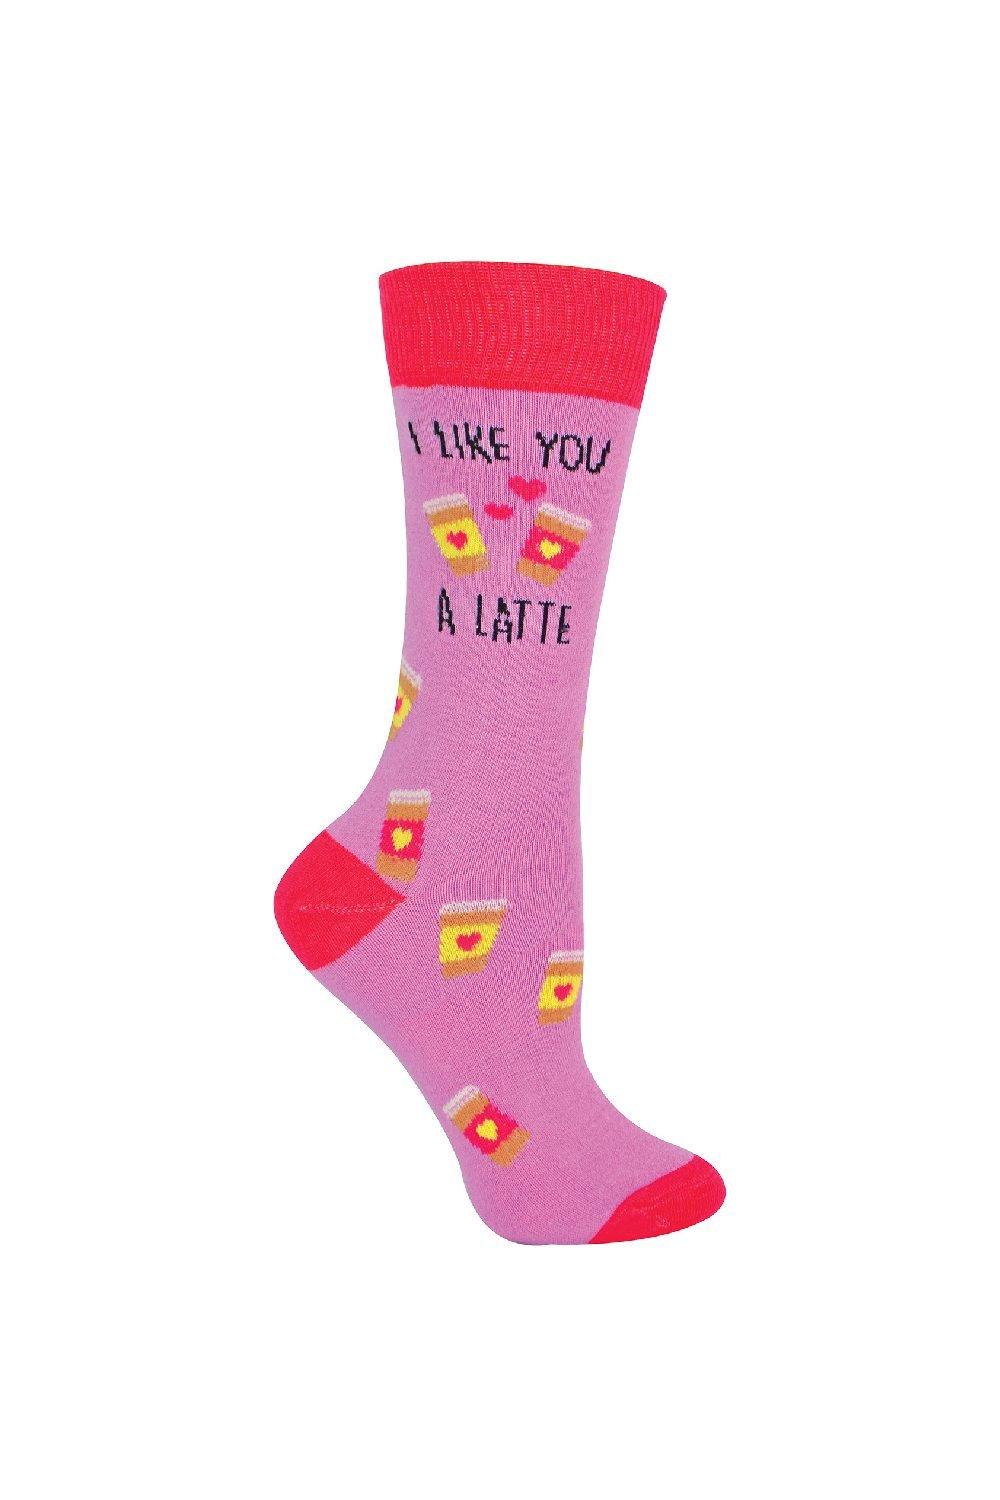 I Like You A Latte' Funny Slogan Novelty Coffee Gift Socks